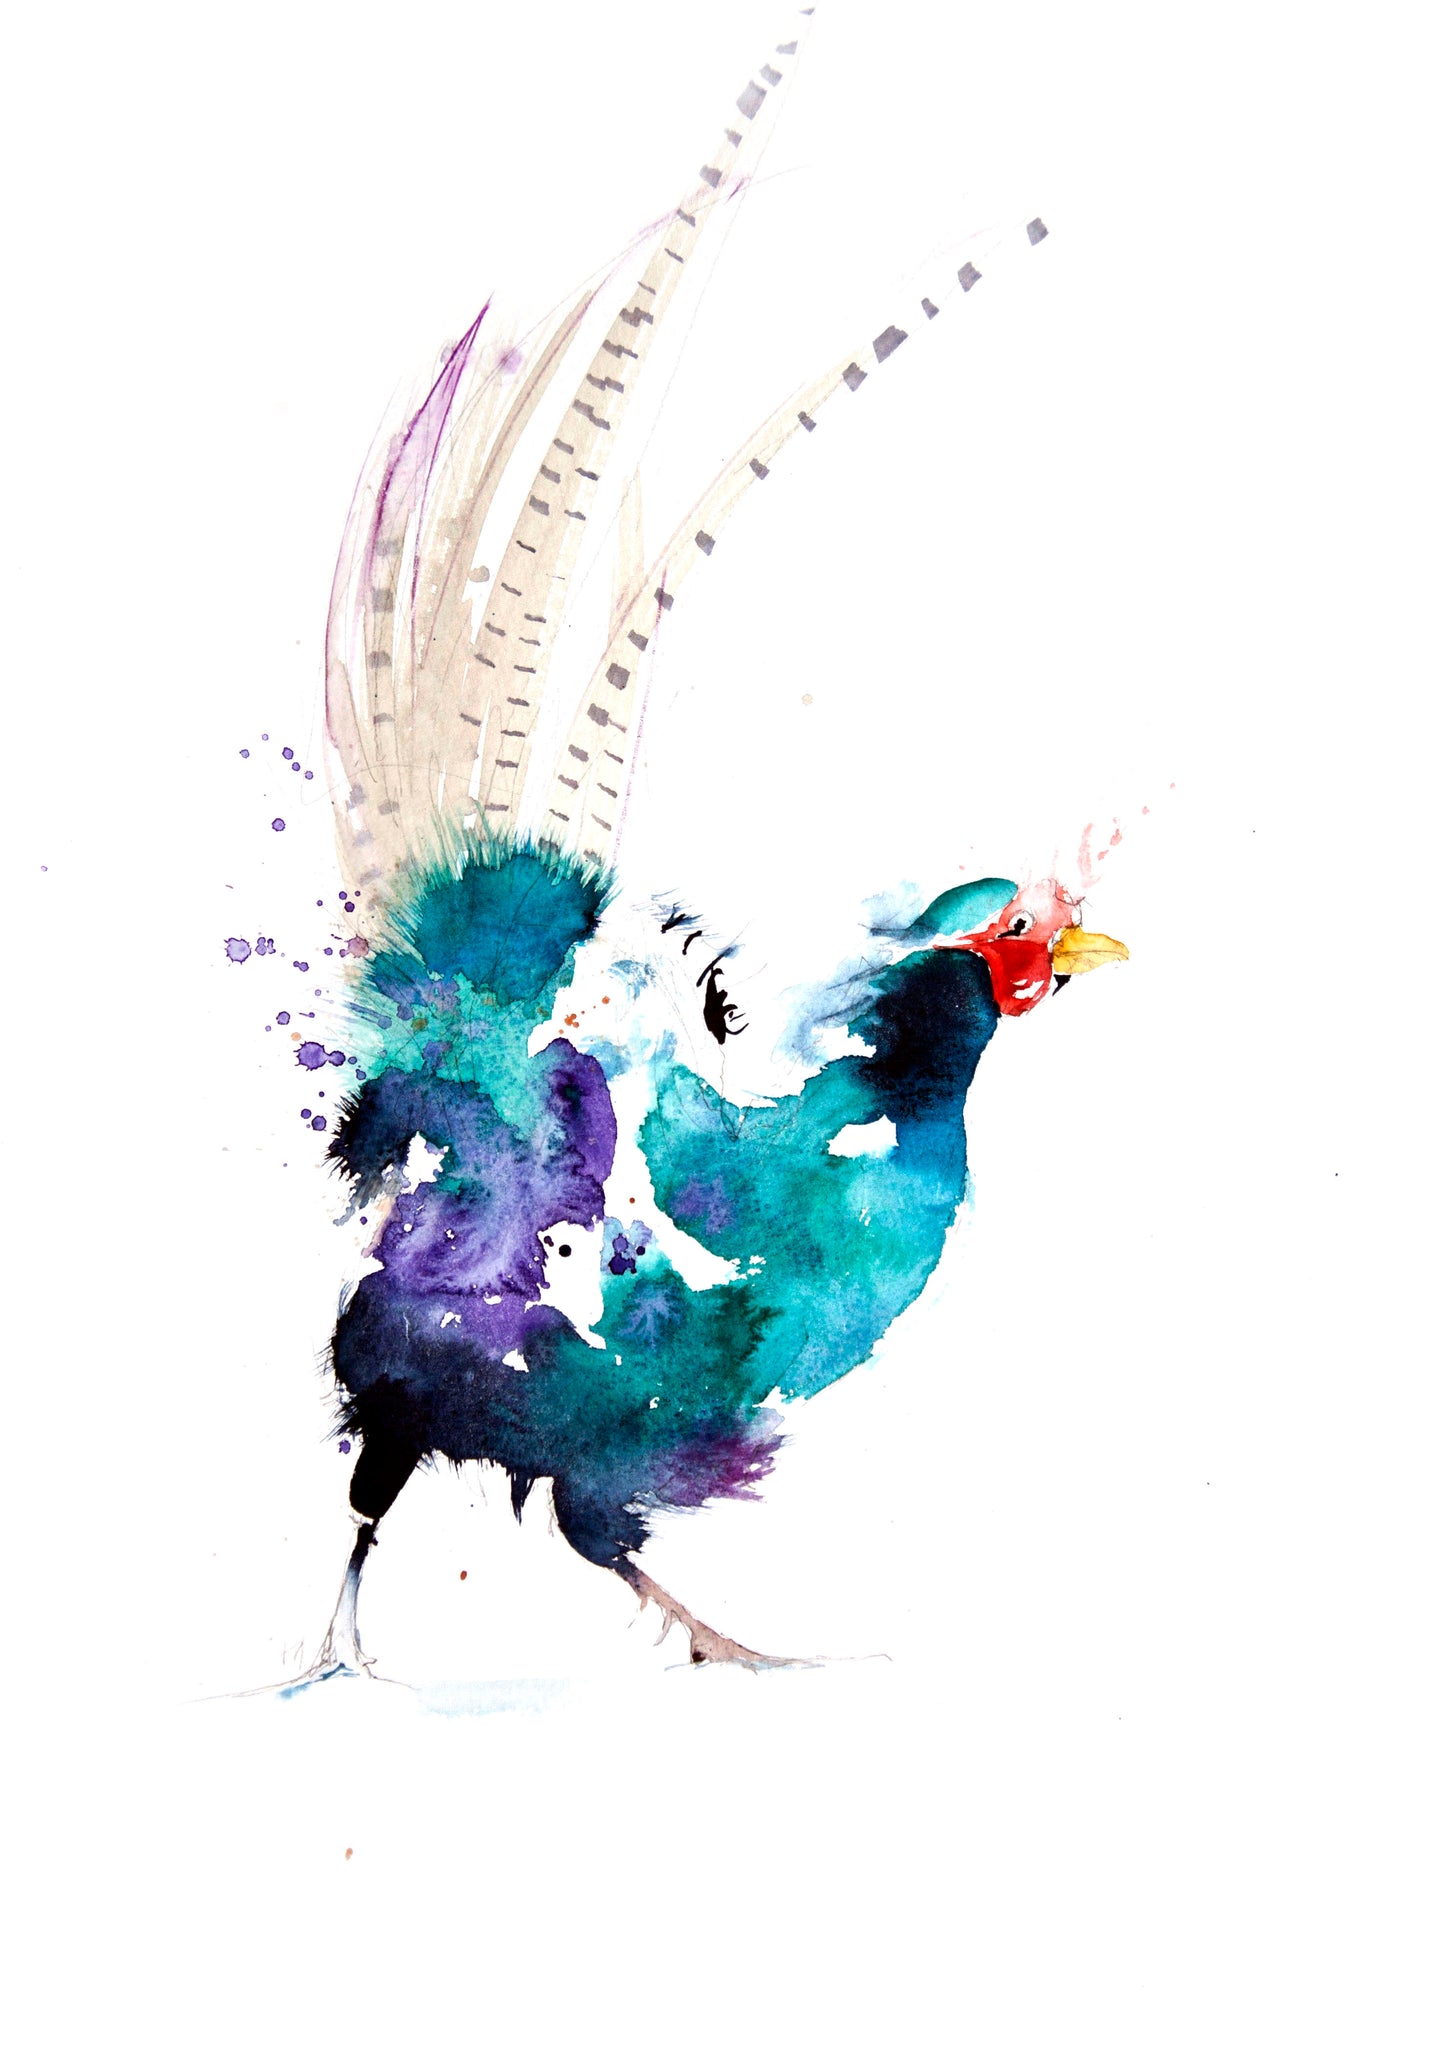 LIMITED EDITON PRINT of my original Pheasant watercolour - Jen Buckley Art limited edition animal art prints